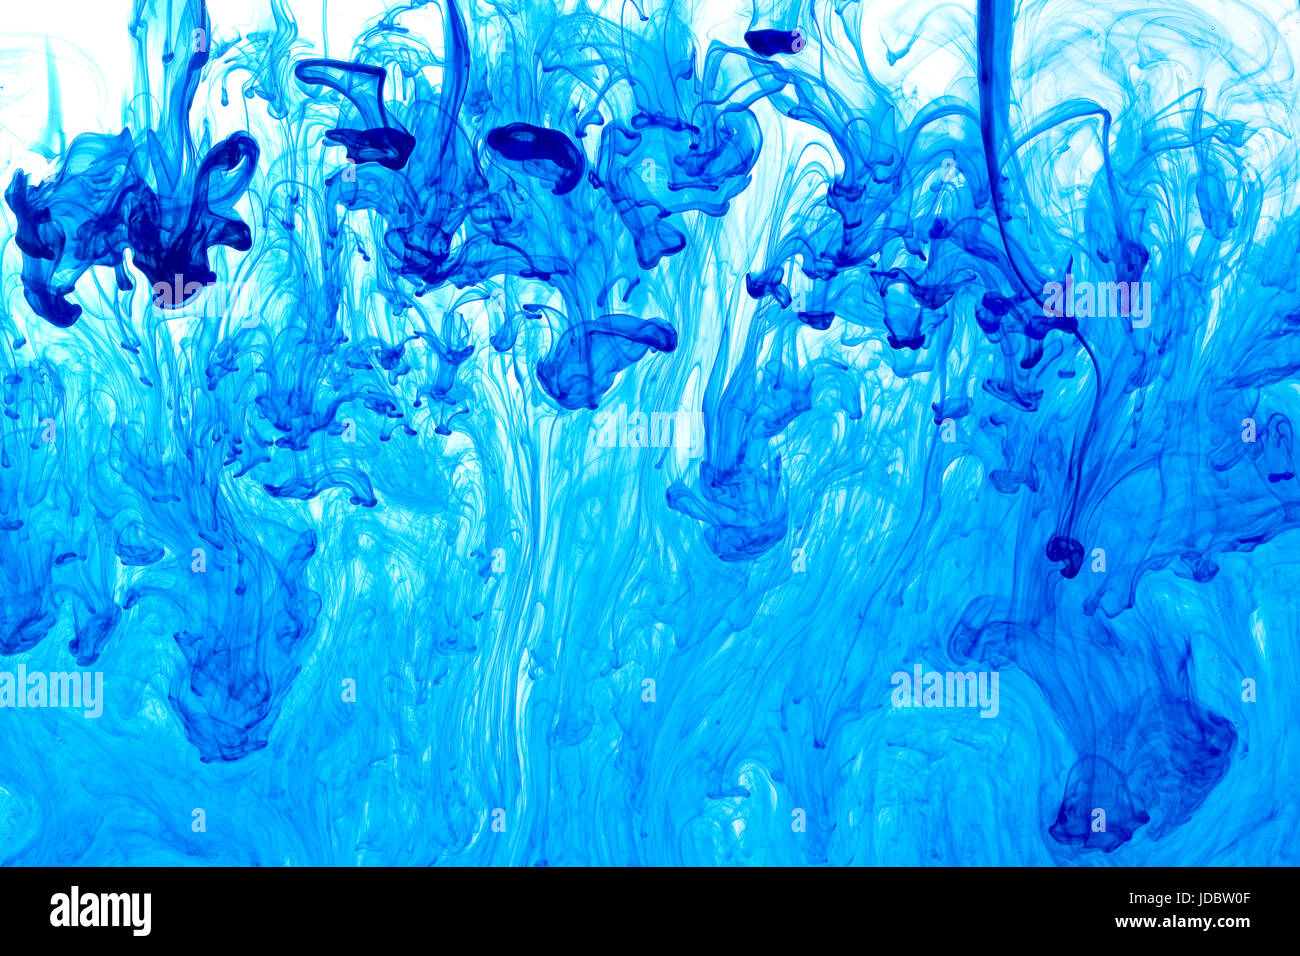 Abstract Blue Tint Swirl Blob Background Stock Photo - Alamy